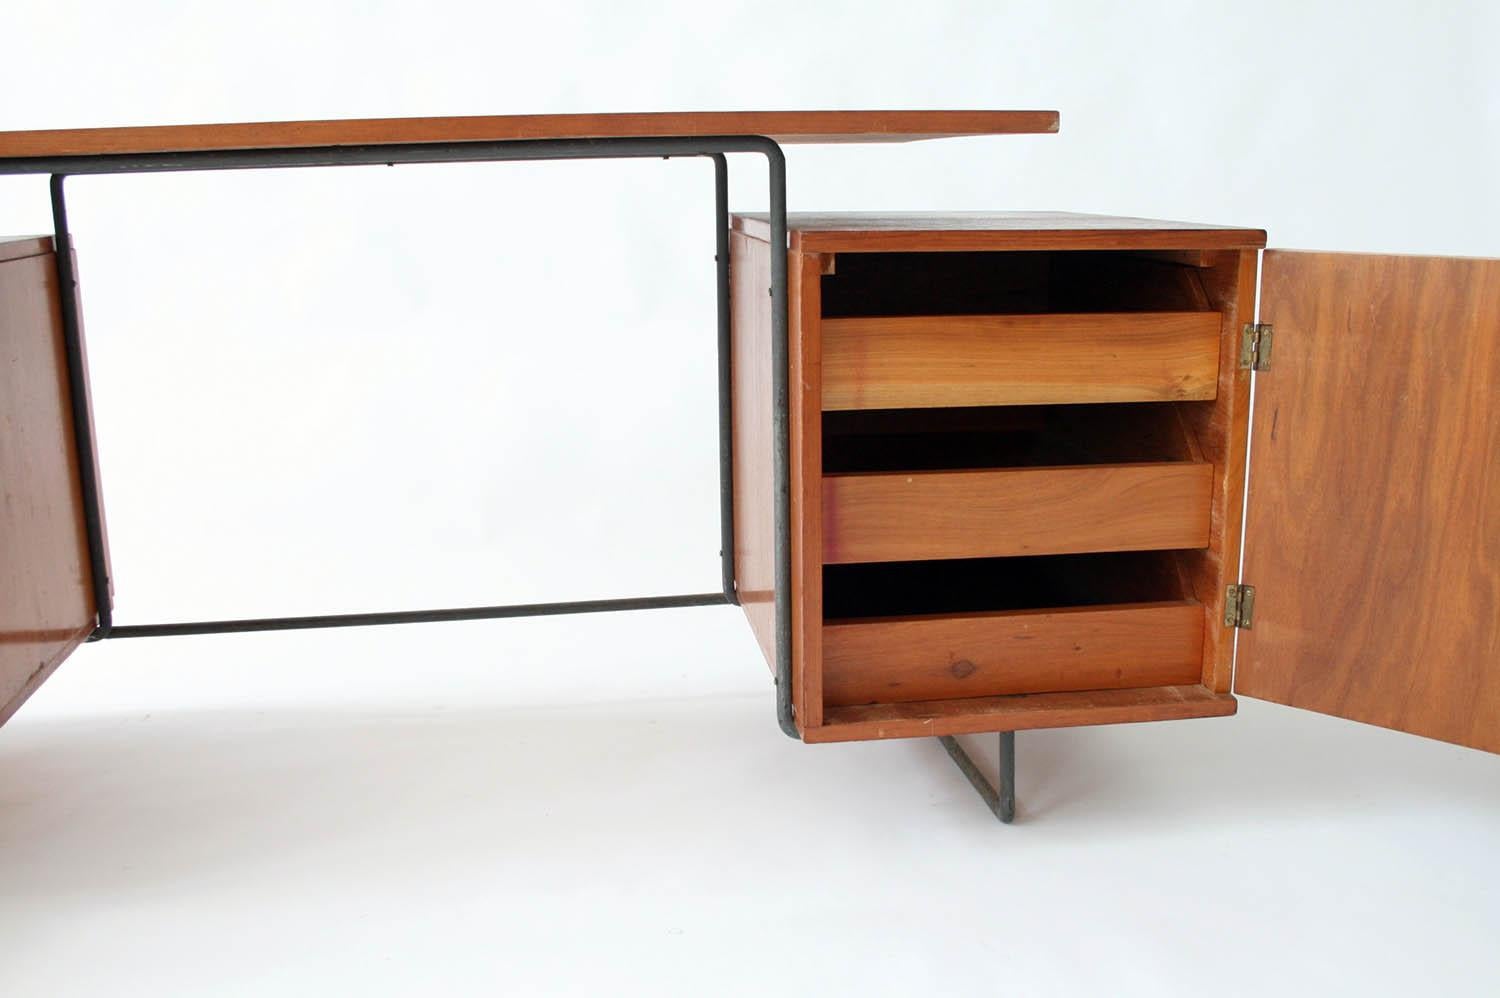 Brazilian Joaquim Tenreiro Jacaranda and Steel Floating Top Desk Designed in 1954, Brazil For Sale